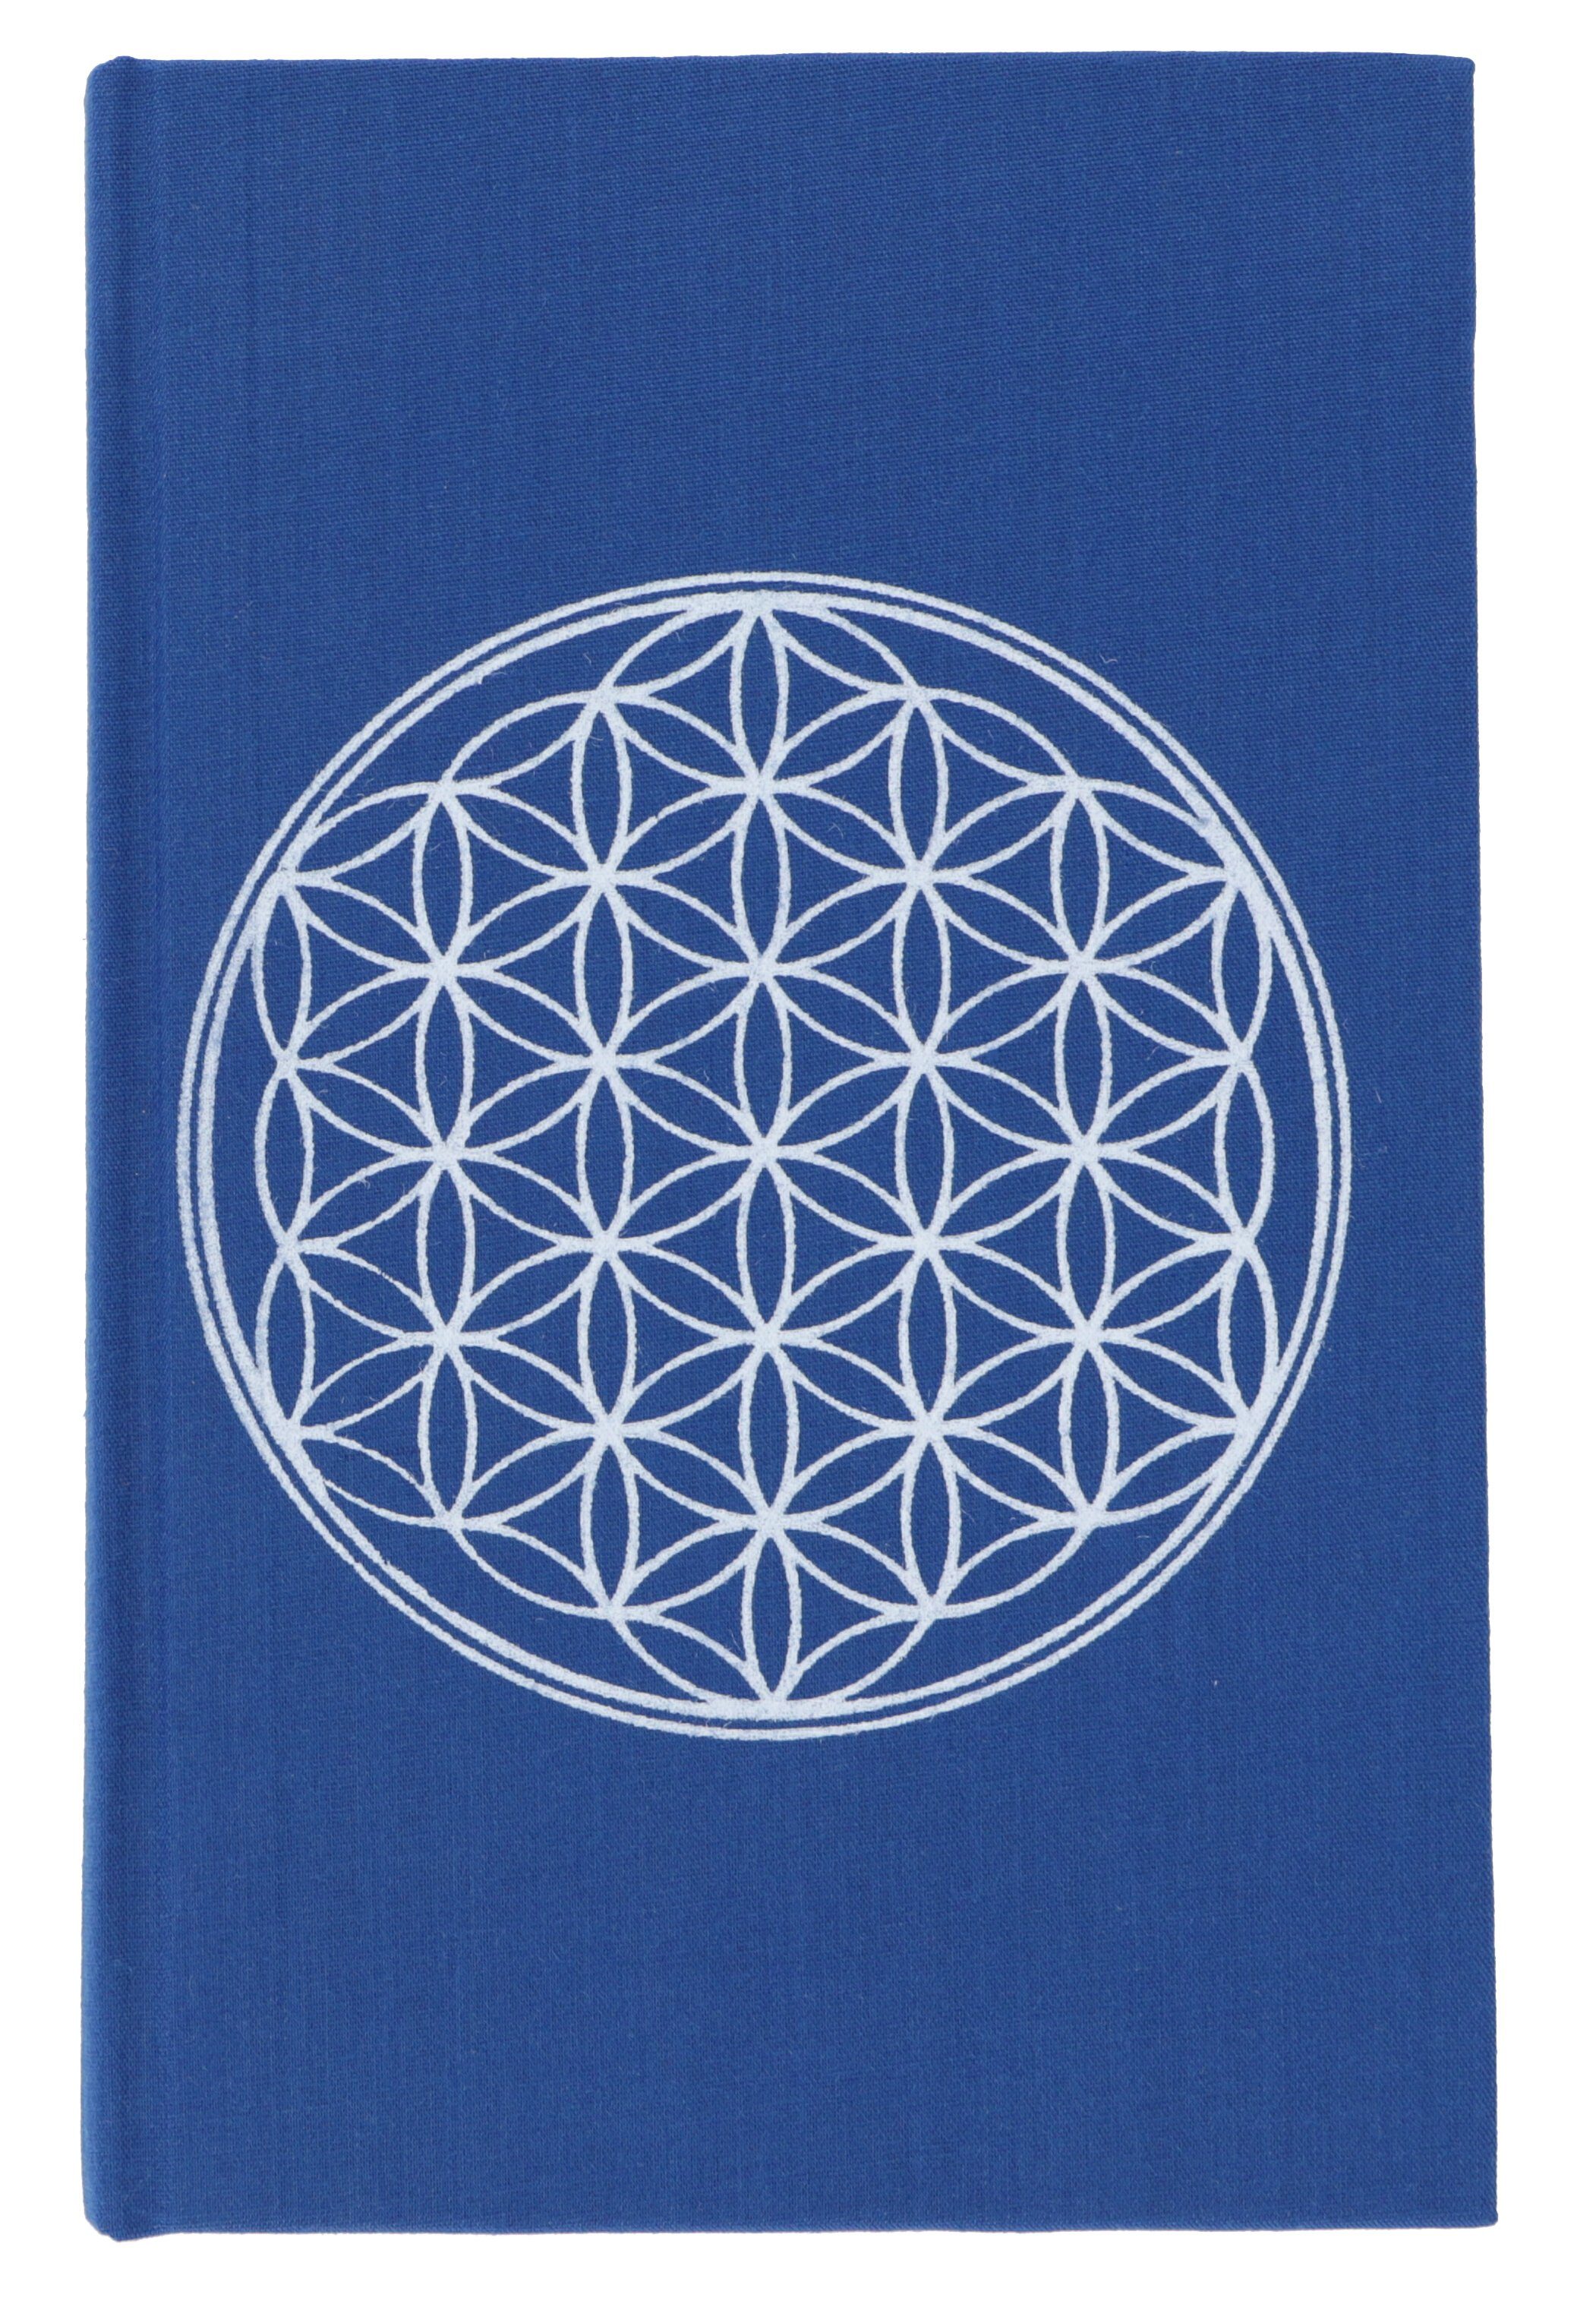 Guru-Shop Tagebuch Notizbuch, Tagebuch - Blume des Lebens blau | Tagebücher